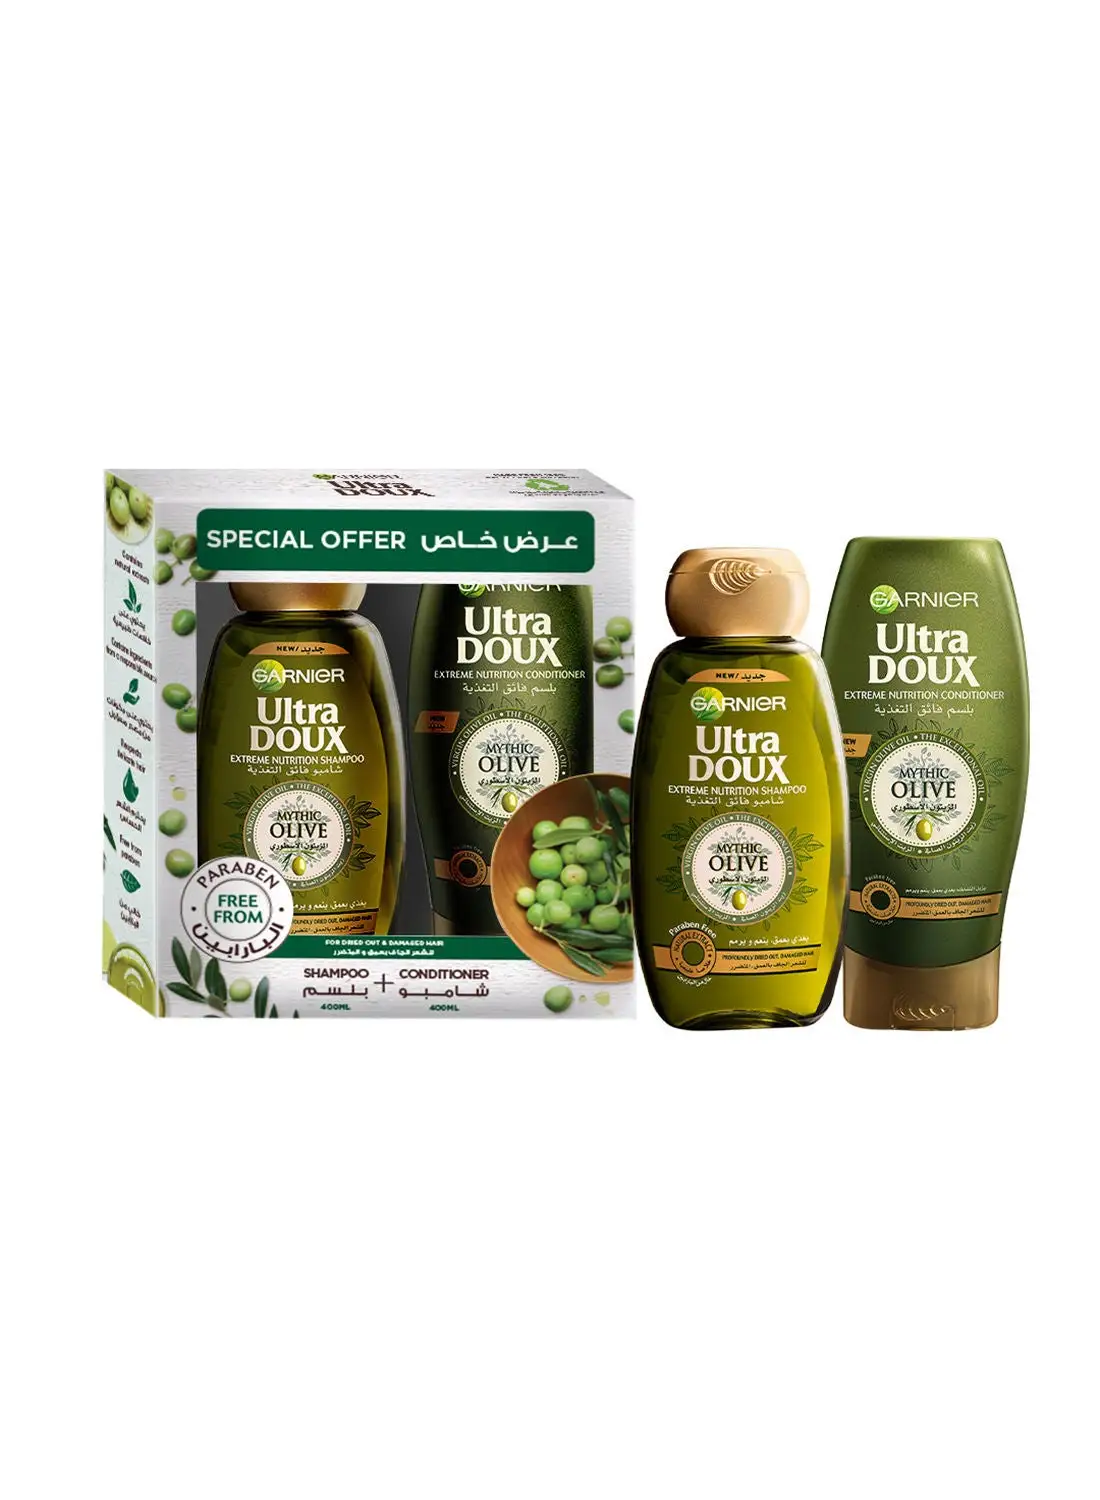 Garnier Ultra Doux Mythic Olive 400ml Shampoo + 400ml Conditioner Dual Pack